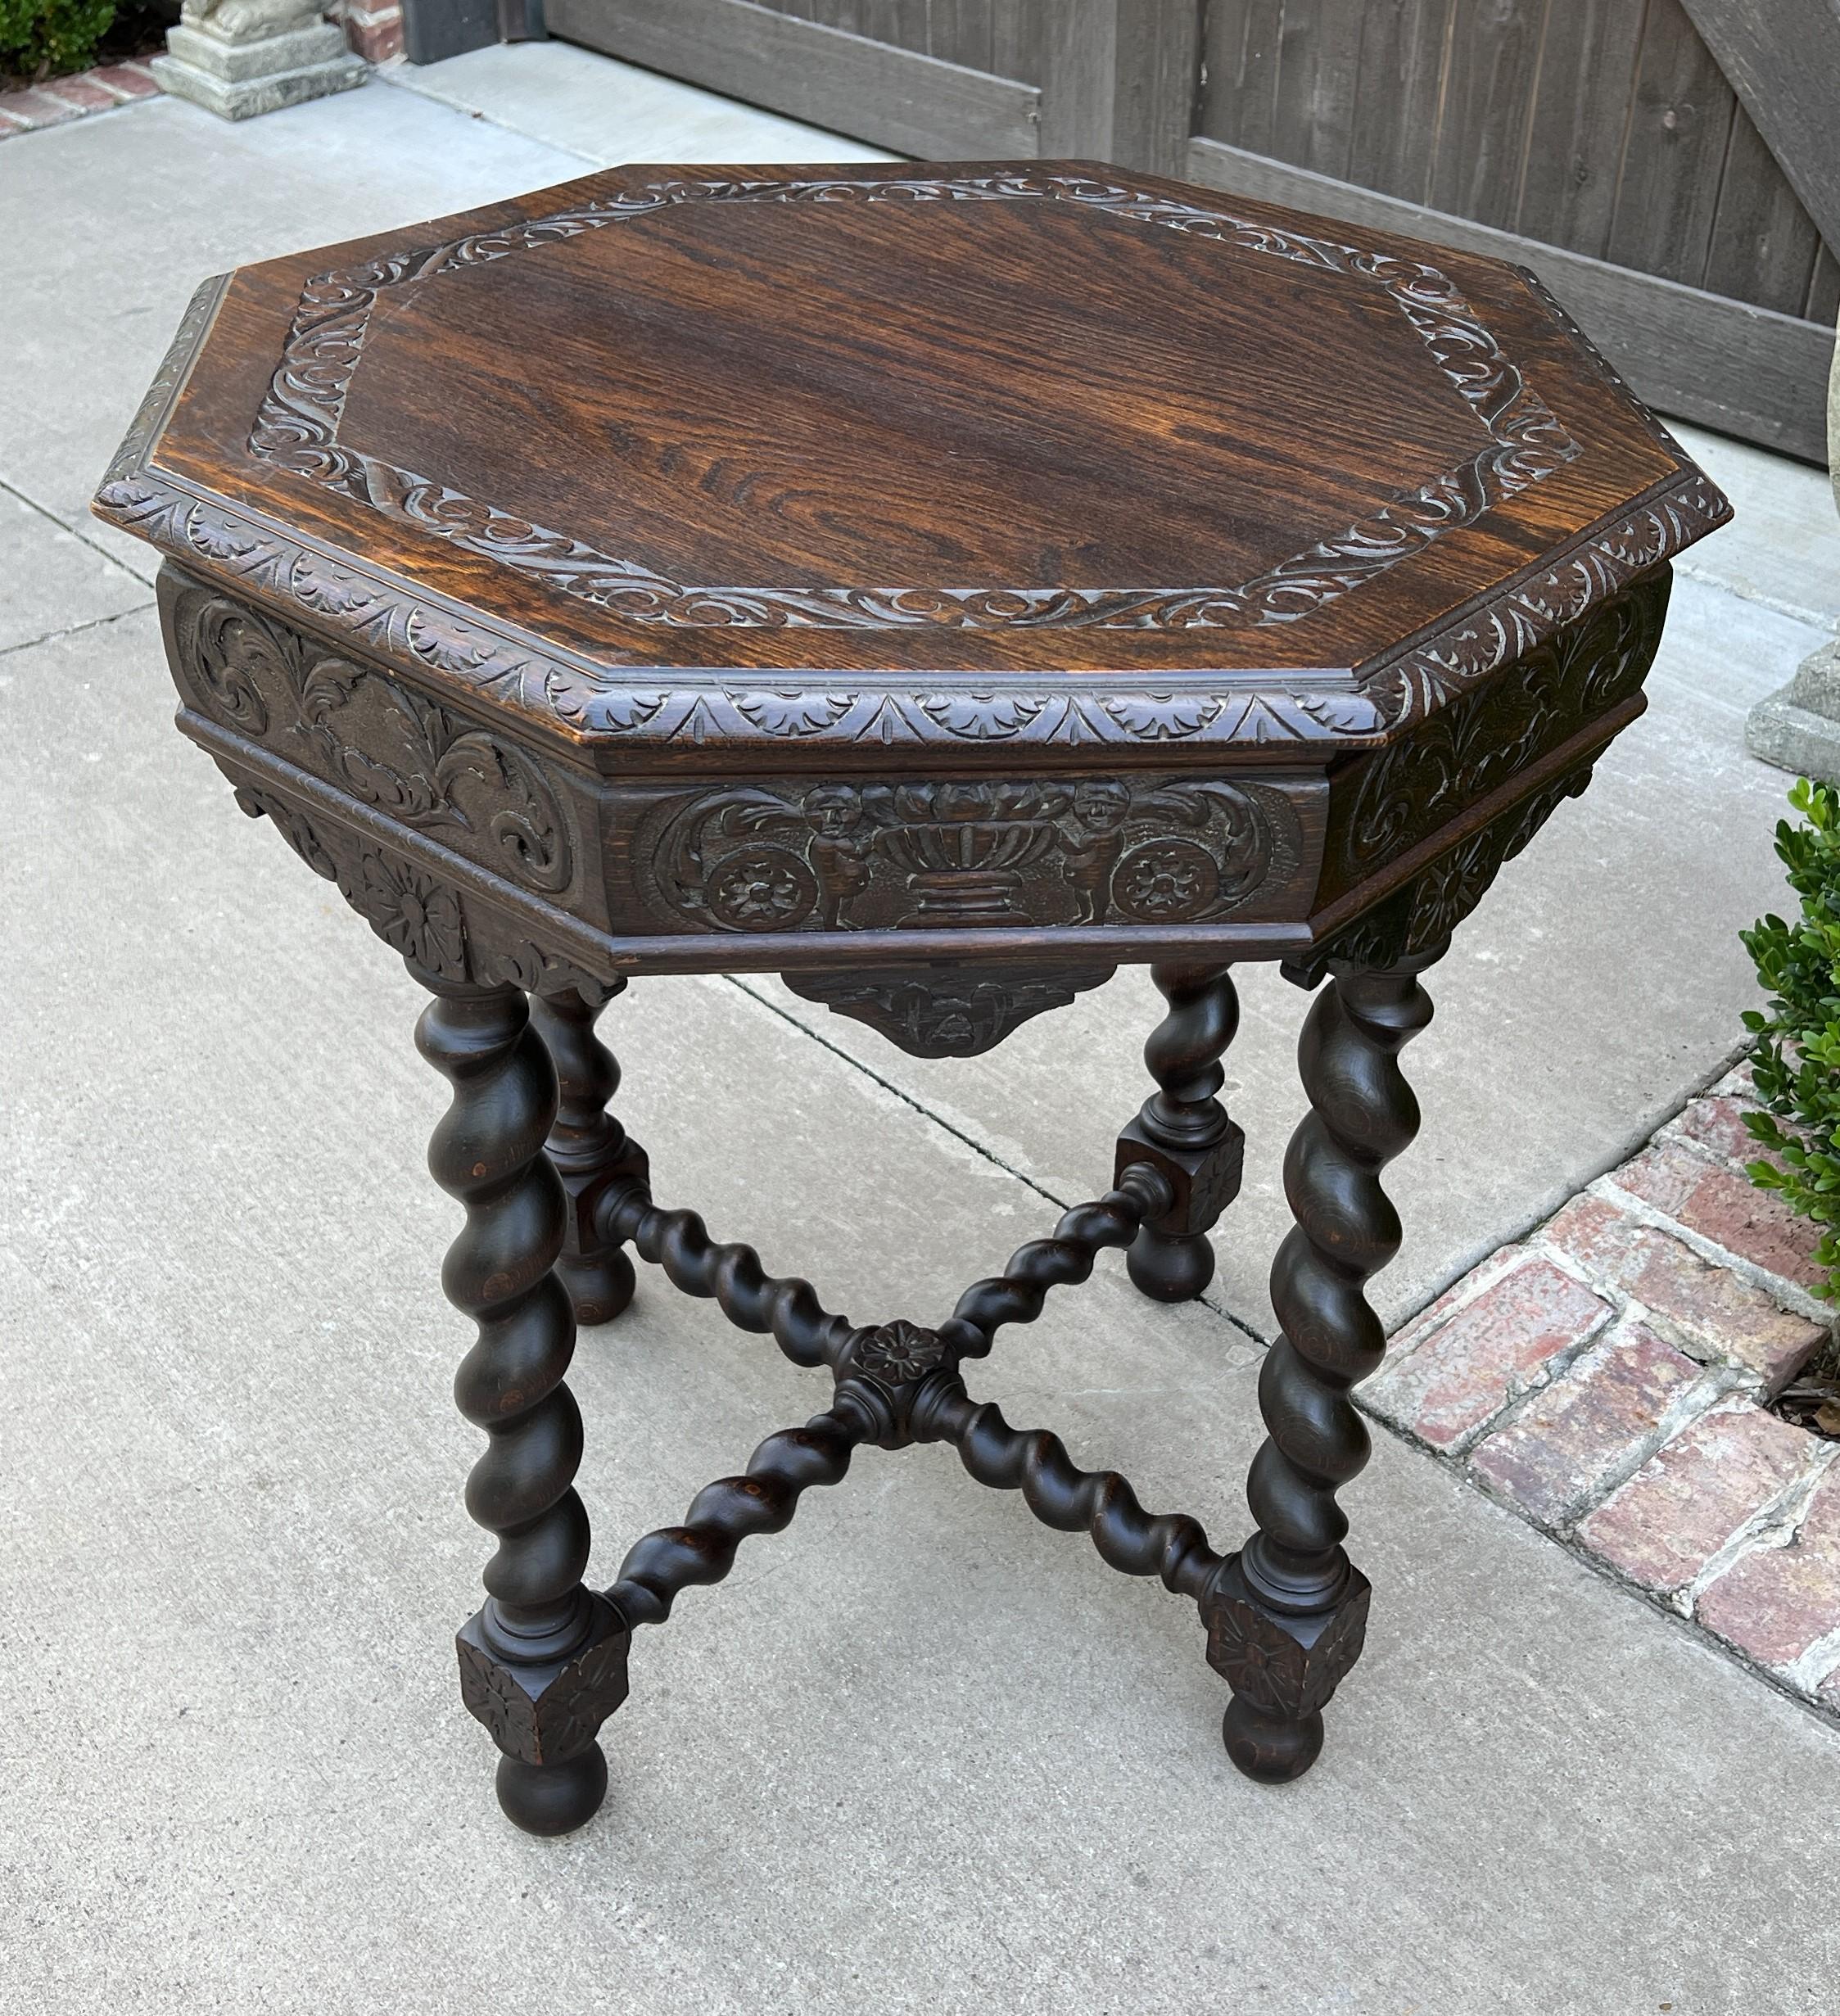 Antique French Table Barley Twist Octagonal Renaissance Revival Oak Carved 19thc For Sale 3